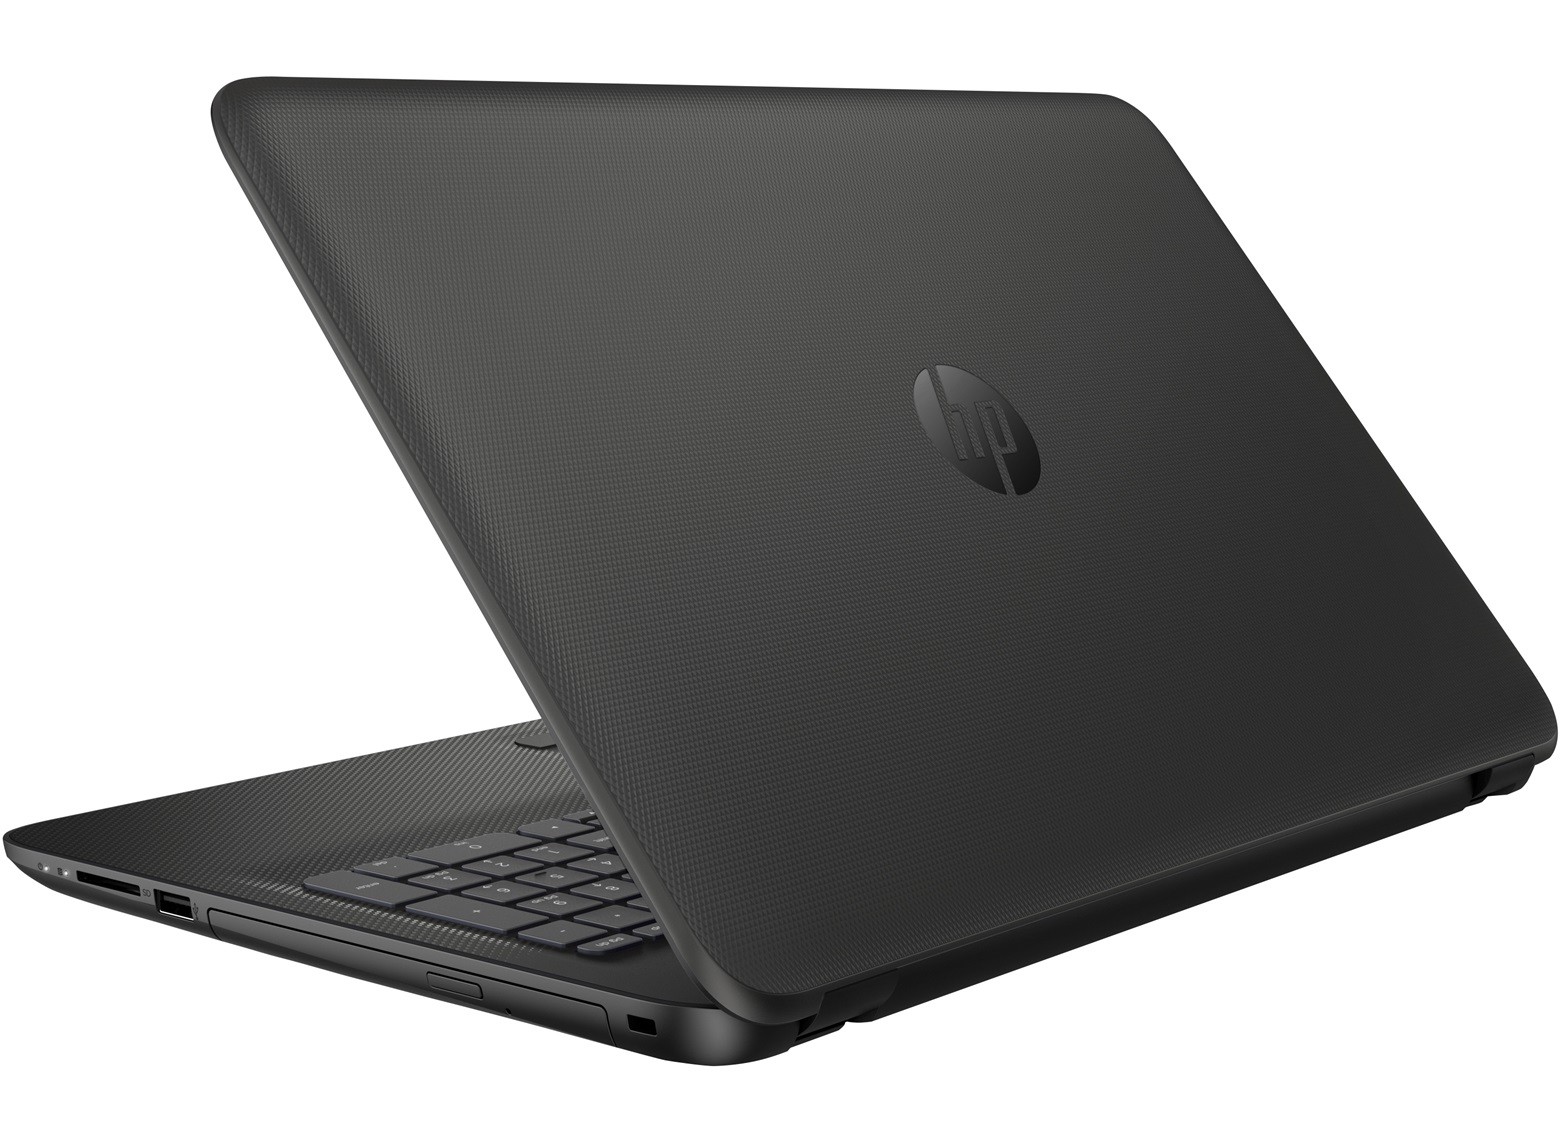 HP-15-af131dx-15-6-Refurbished HP 15-af131dx Notebook AMD 15.6-inch 4 GB RAM 500 GB HDD Win 10 Professional-image